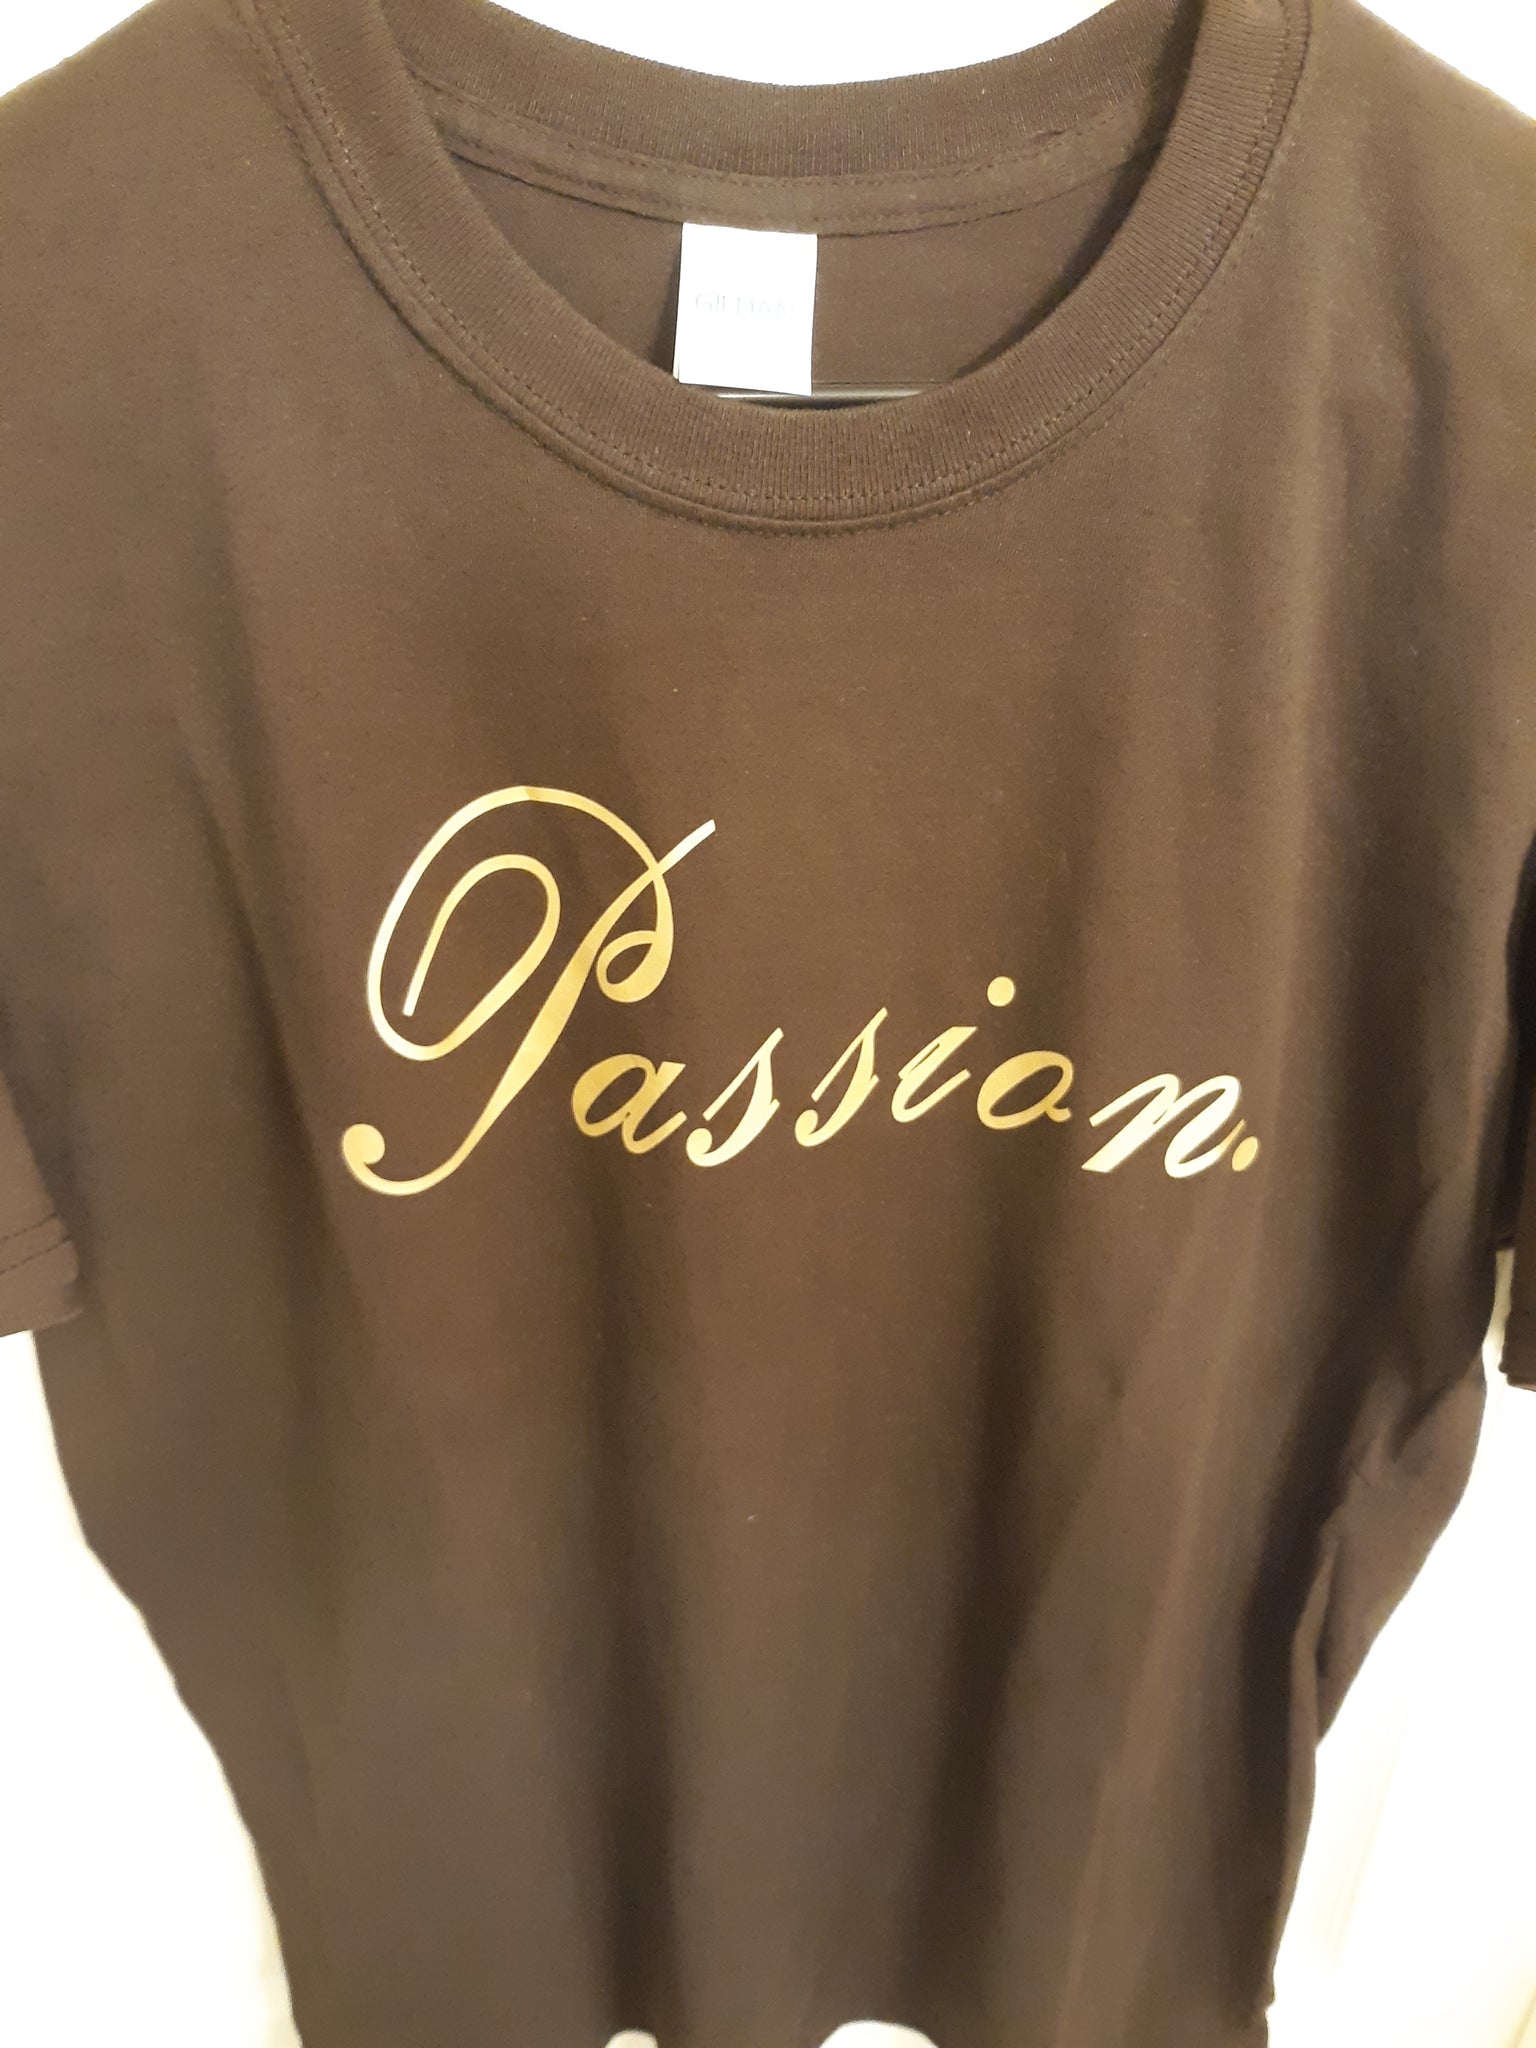 Passion T Shirt